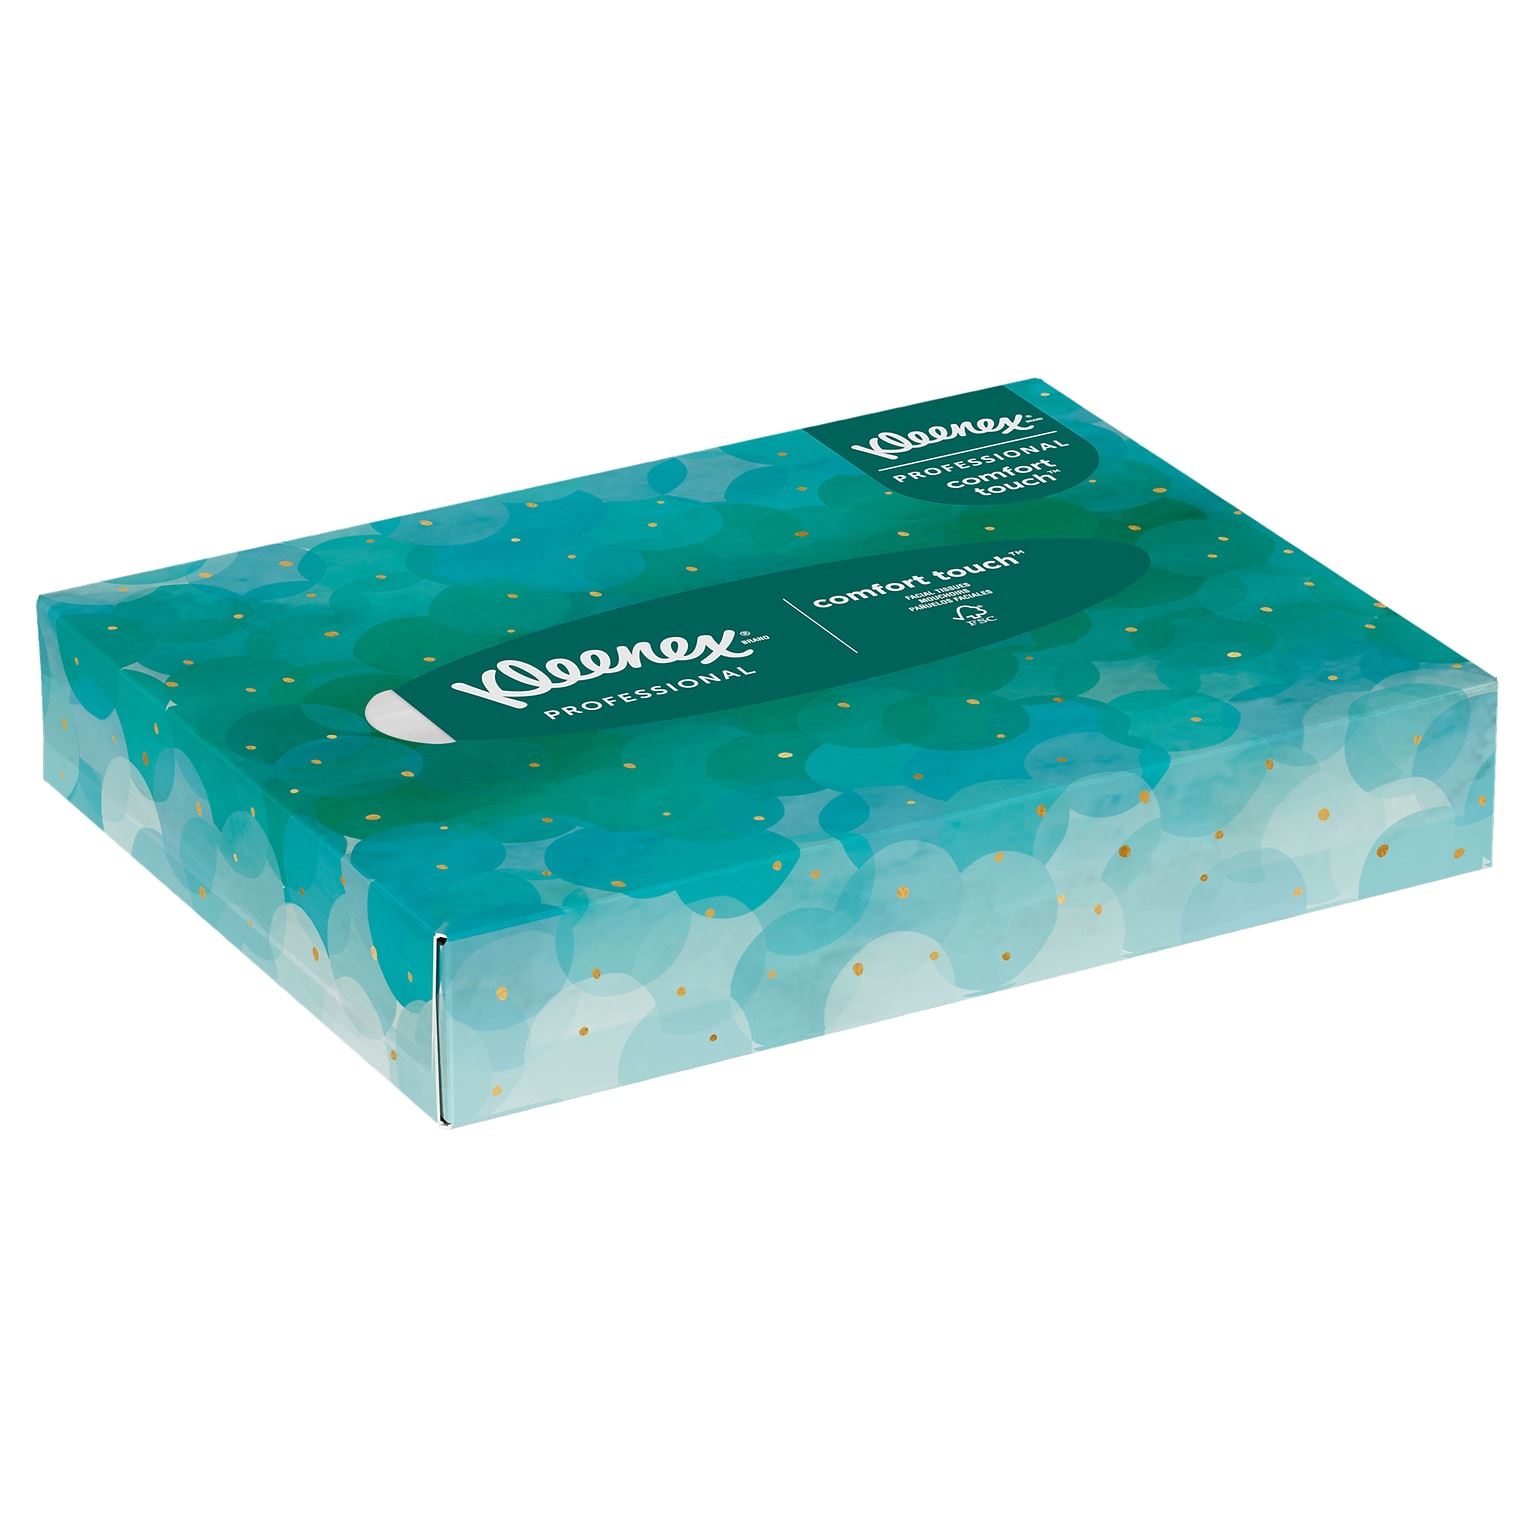 Kleenex Junior Facial Tissue, 2-ply, 48 Tissues/Box, 64 Boxes/Pack (21195)